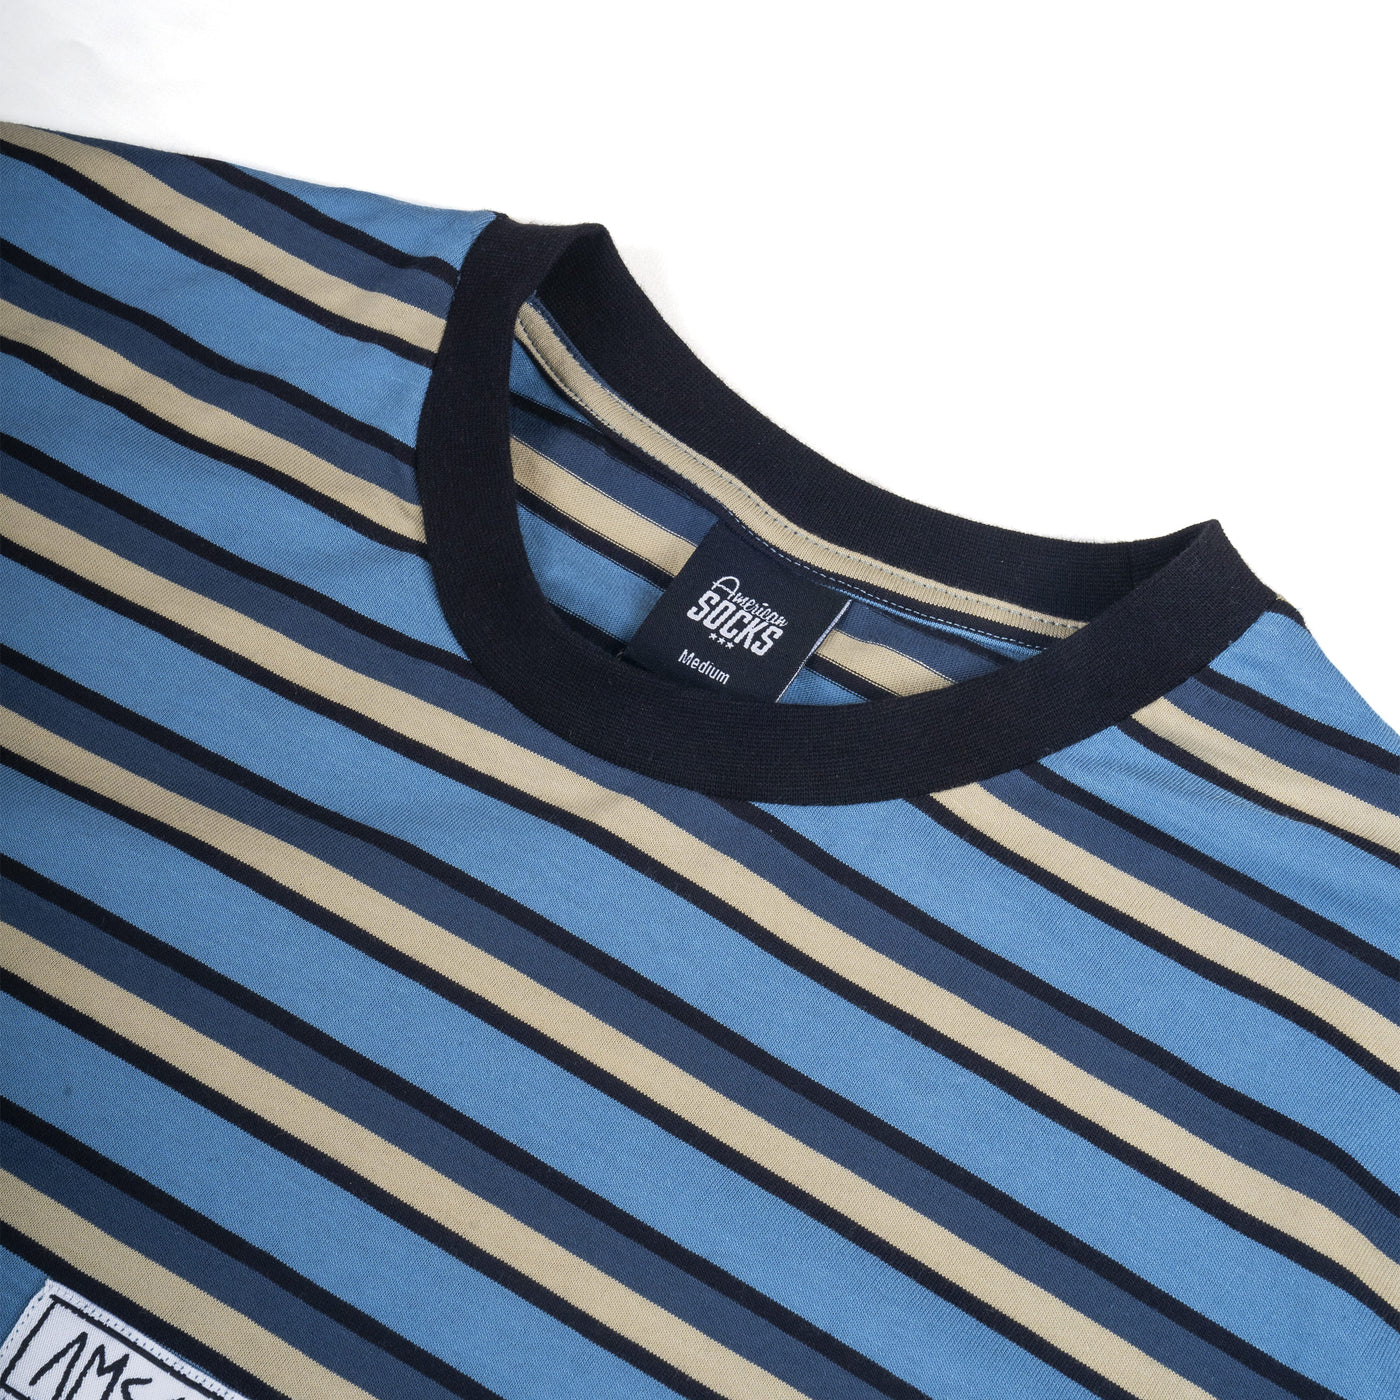 AMSCKS Striped Blue - T-Shirt